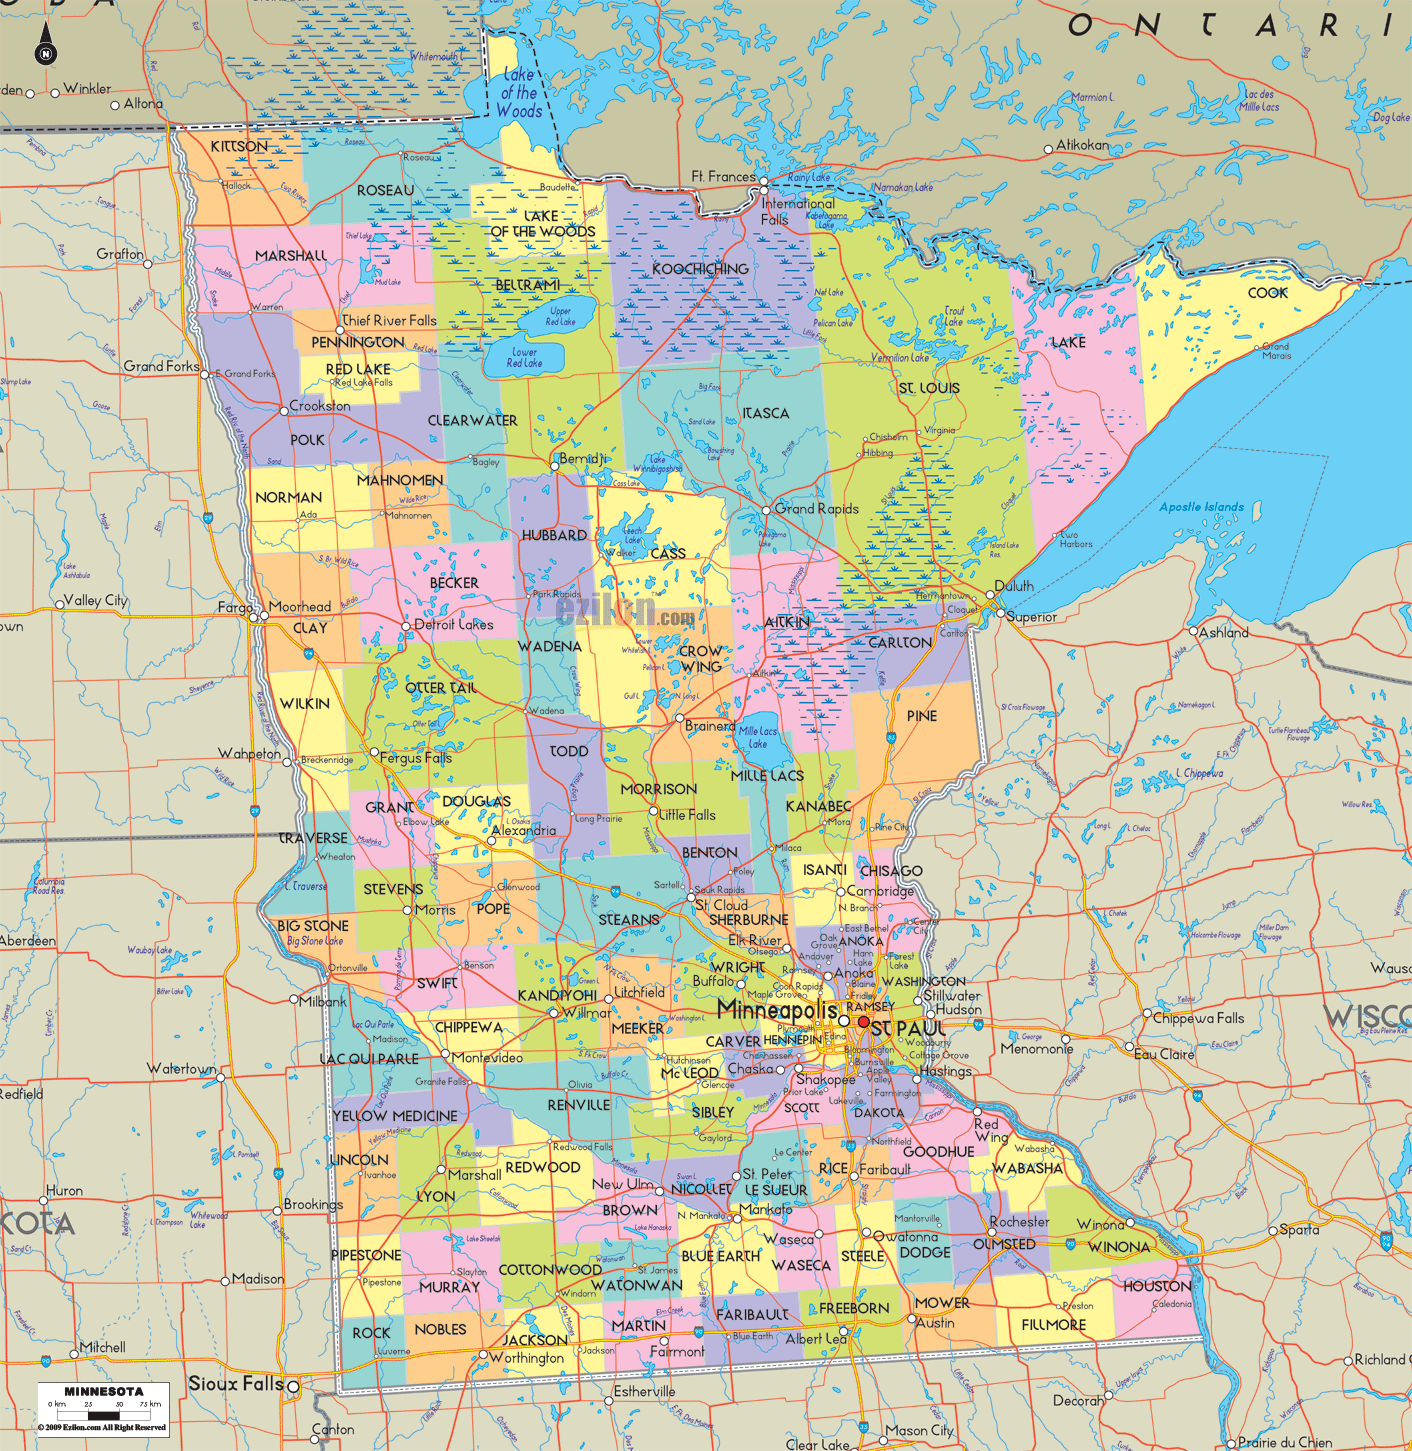 minnesota-county-map